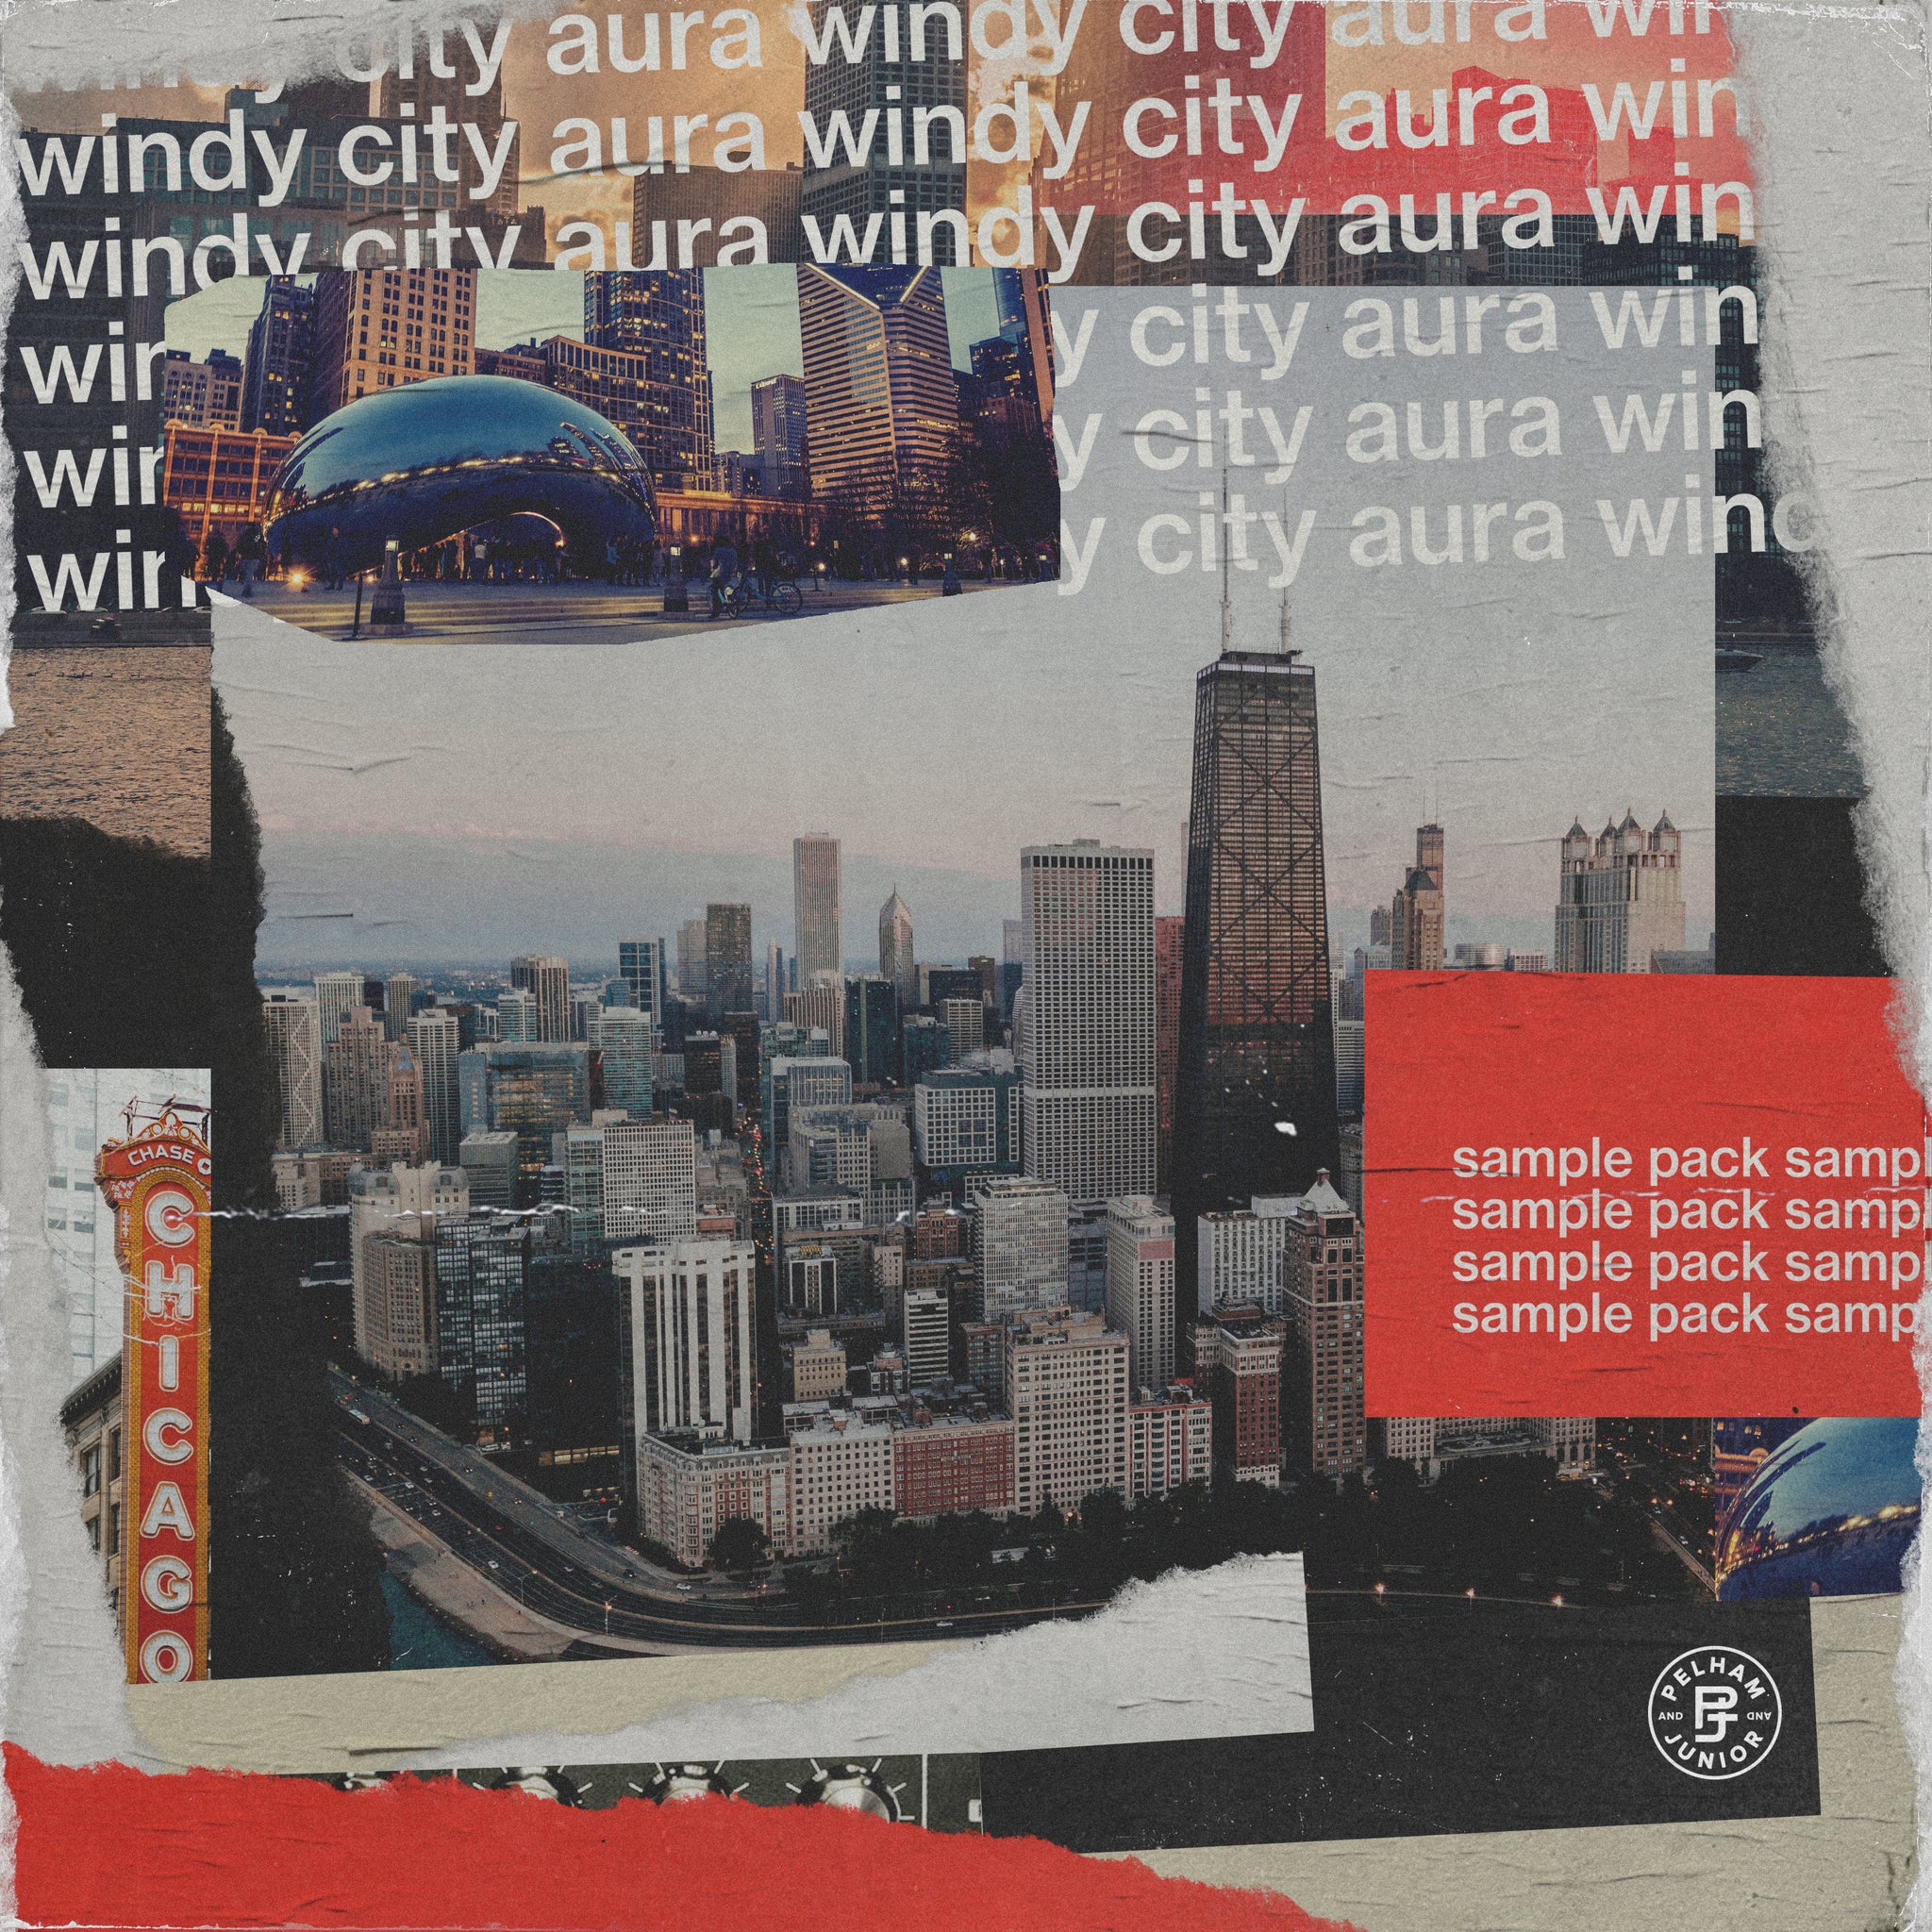 Windy City Aura - Sample Pack